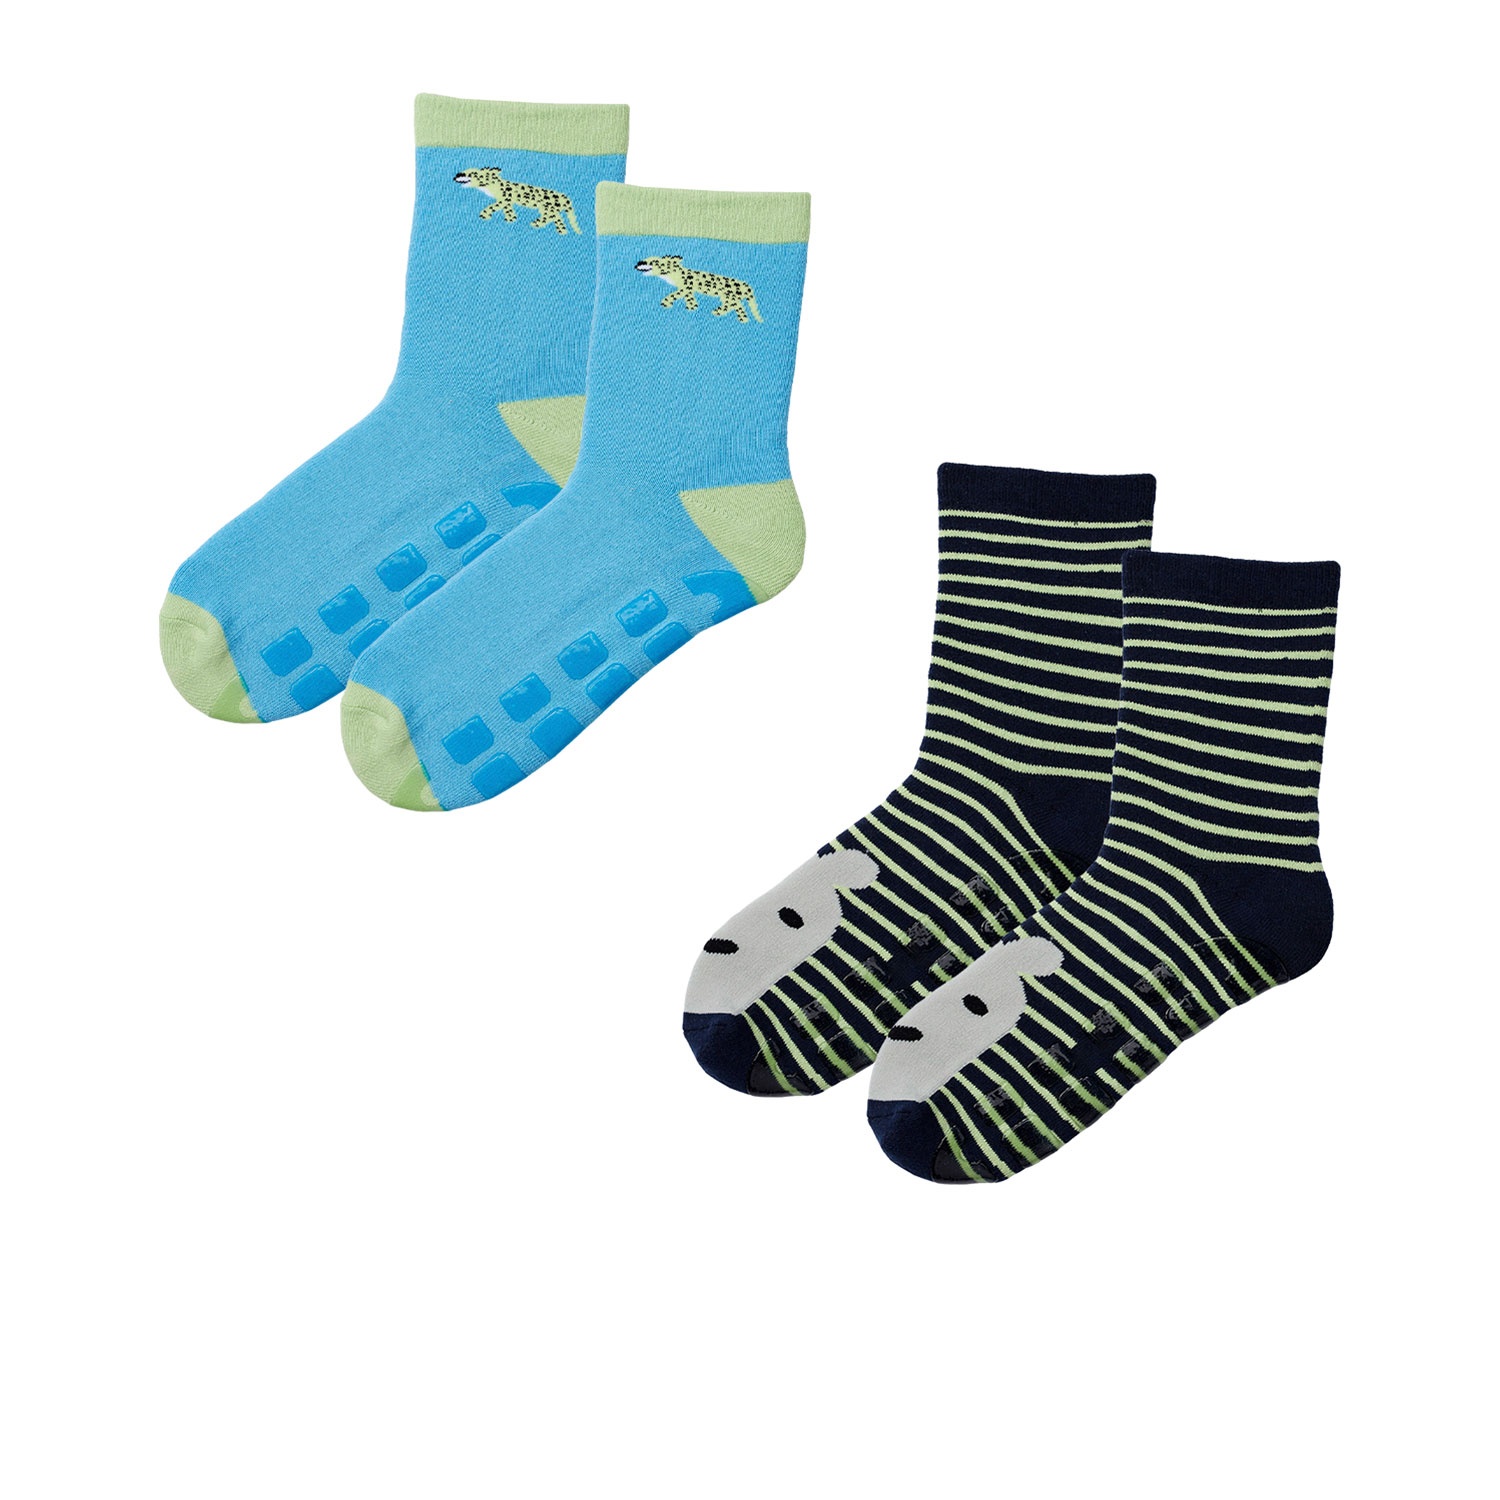 ALIVE Kinder Antirutsch-Socken, 2 Paar